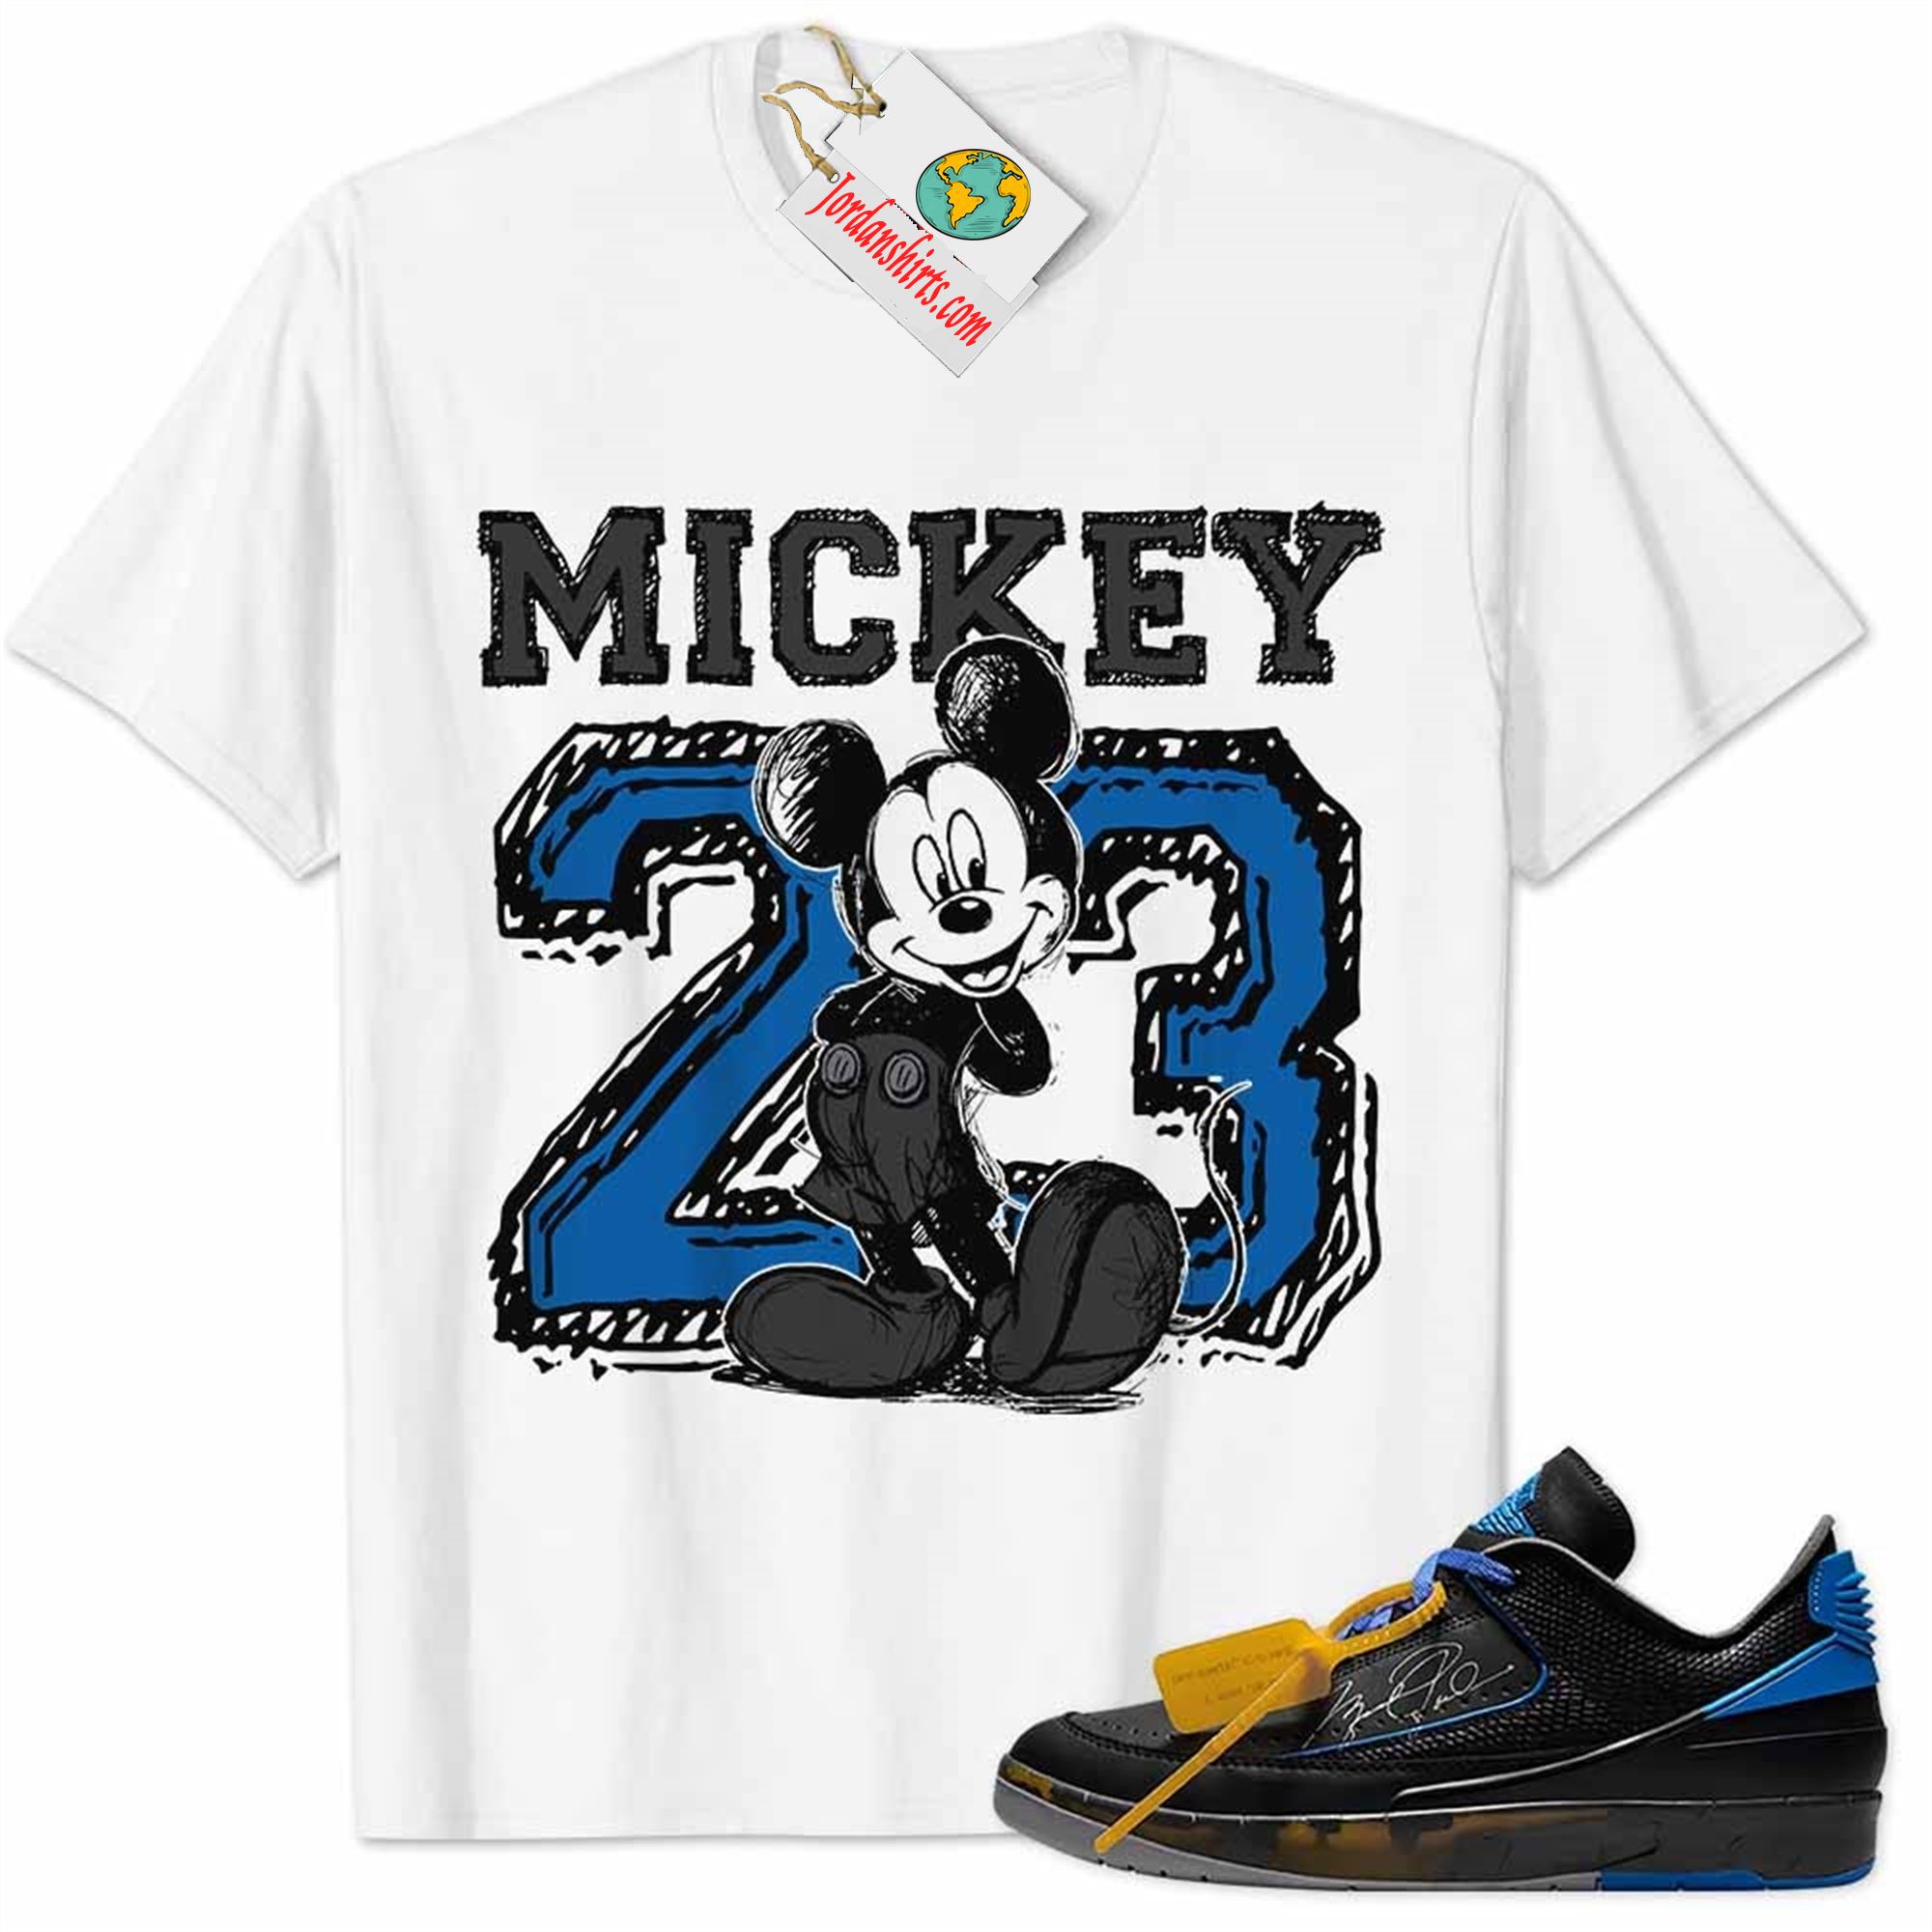 Jordan 2 Shirt, Low X Off-white Black And Varsity Royal 2s Shirt Mickey 23 Michael Jordan Number Draw White Plus Size Up To 5xl